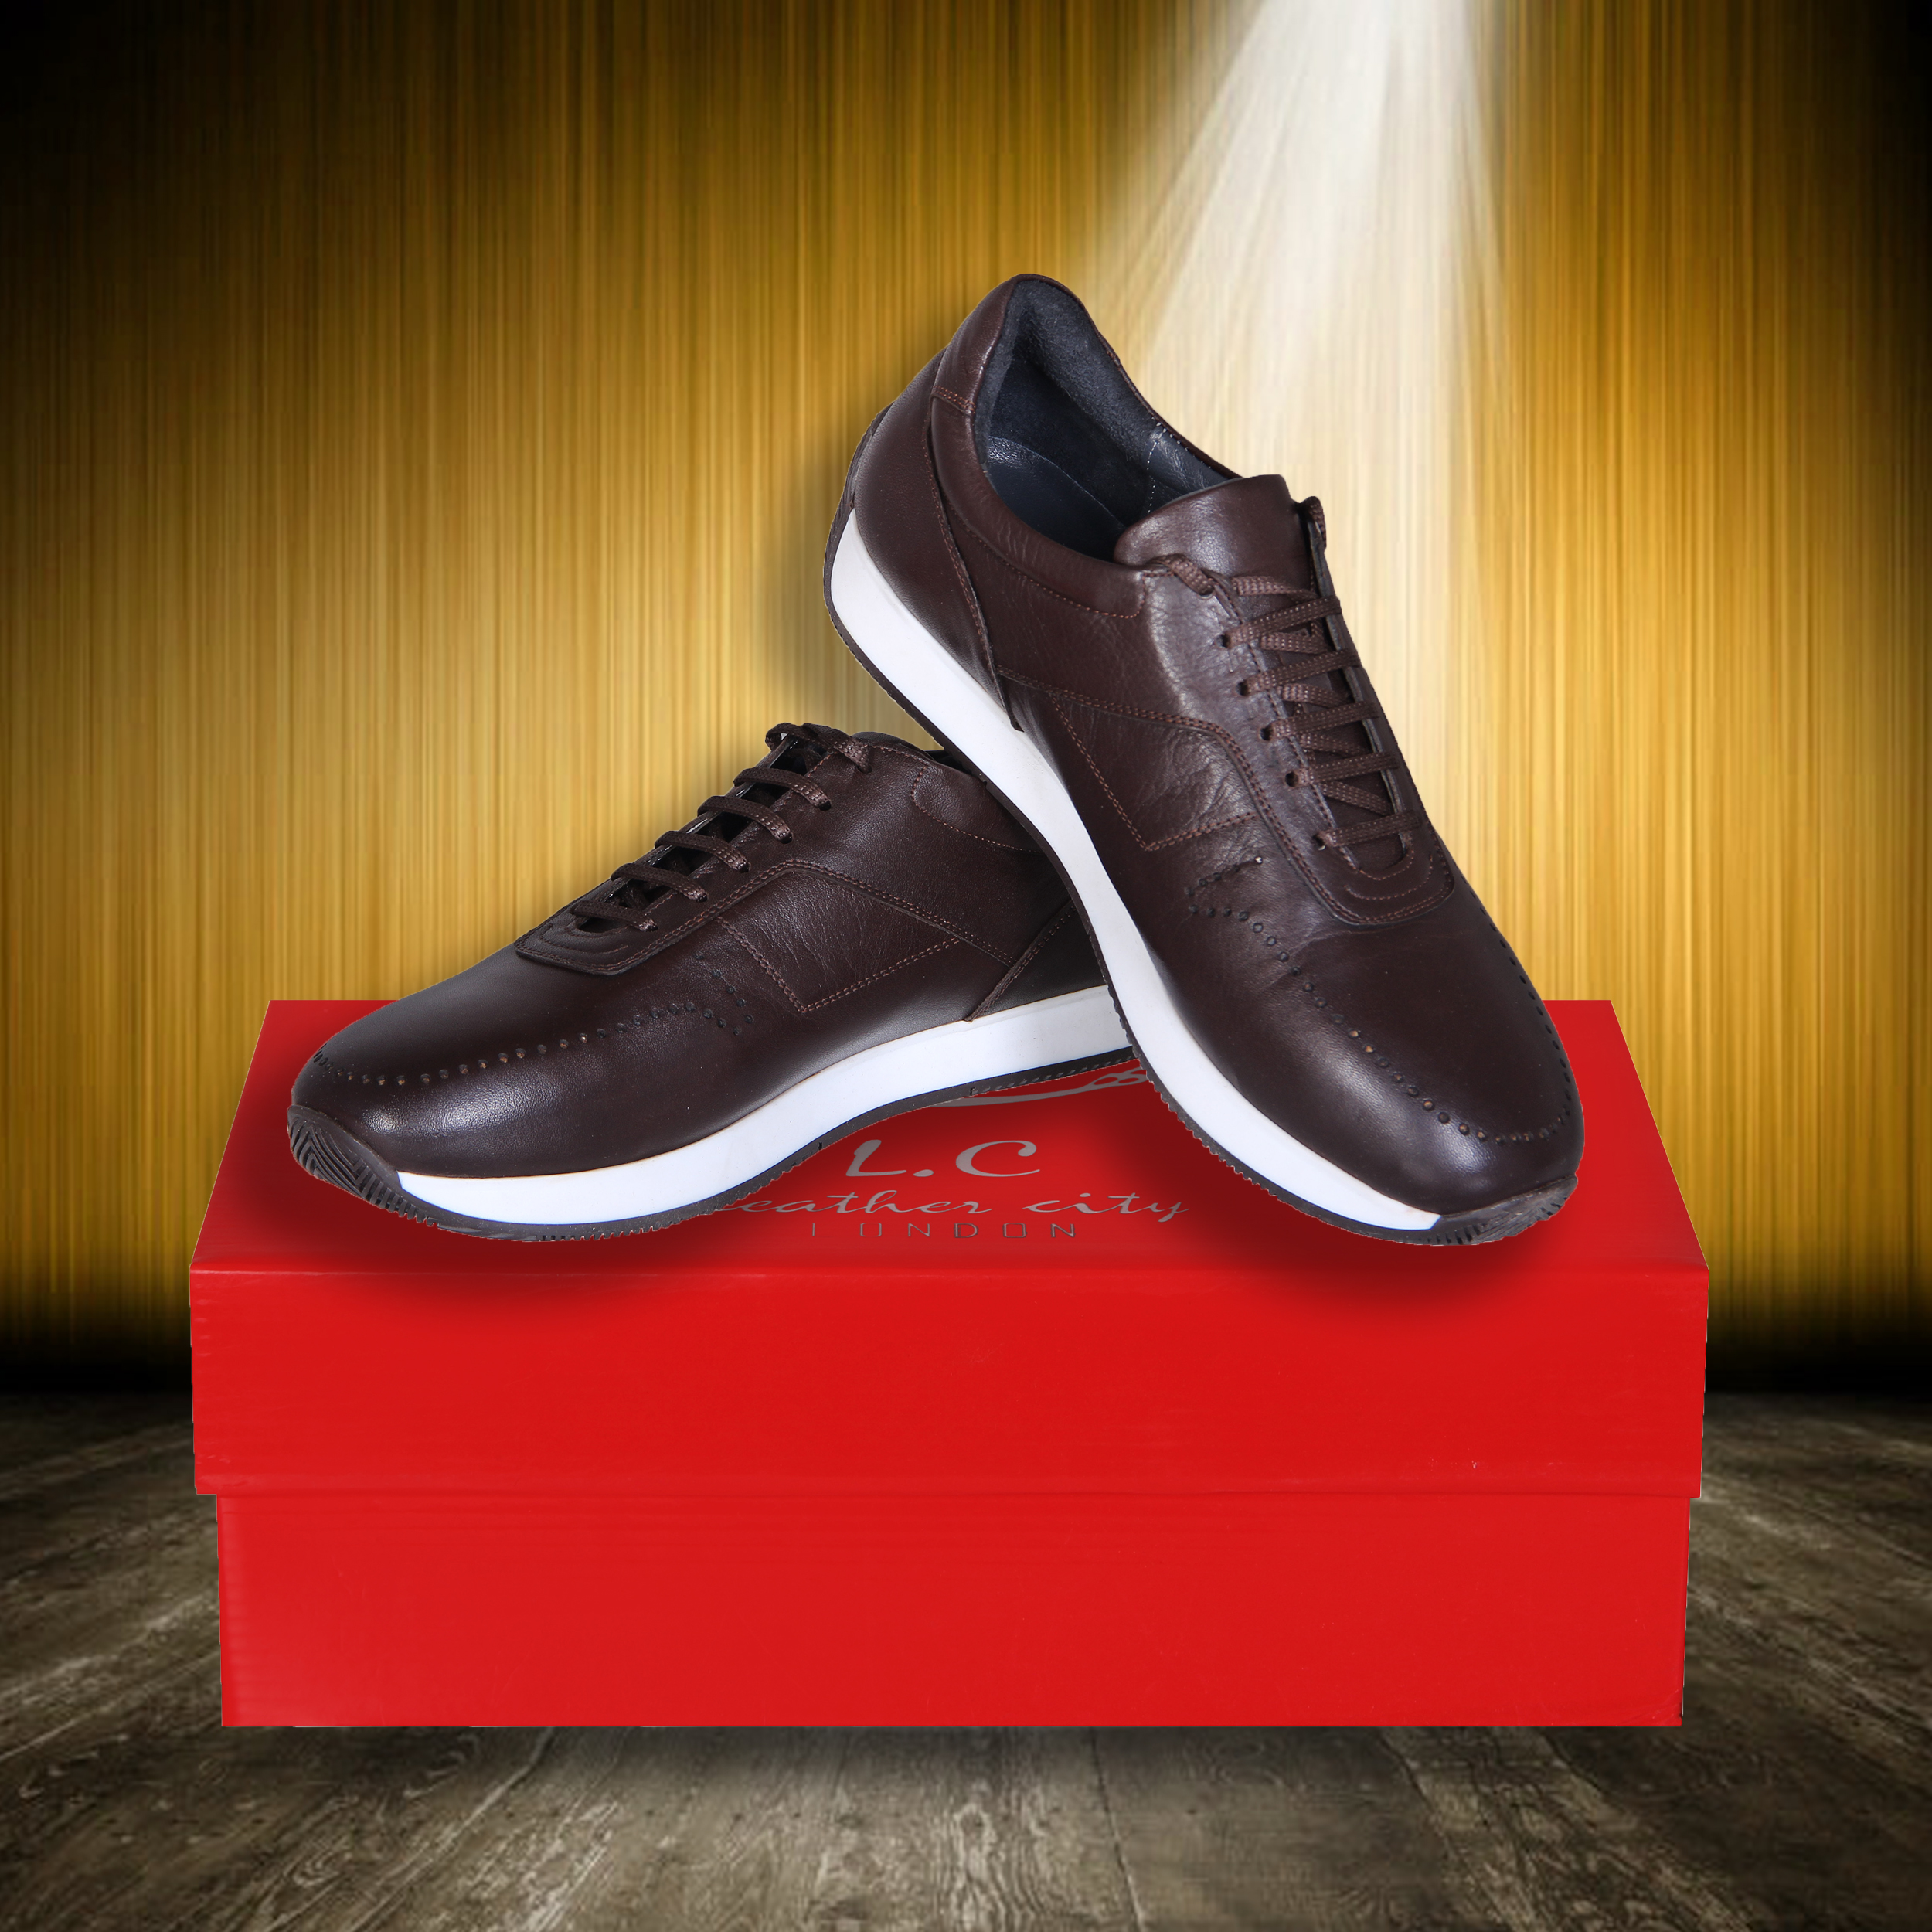 SHAHRECHARM men's casual shoes ,GH5003-3 Model